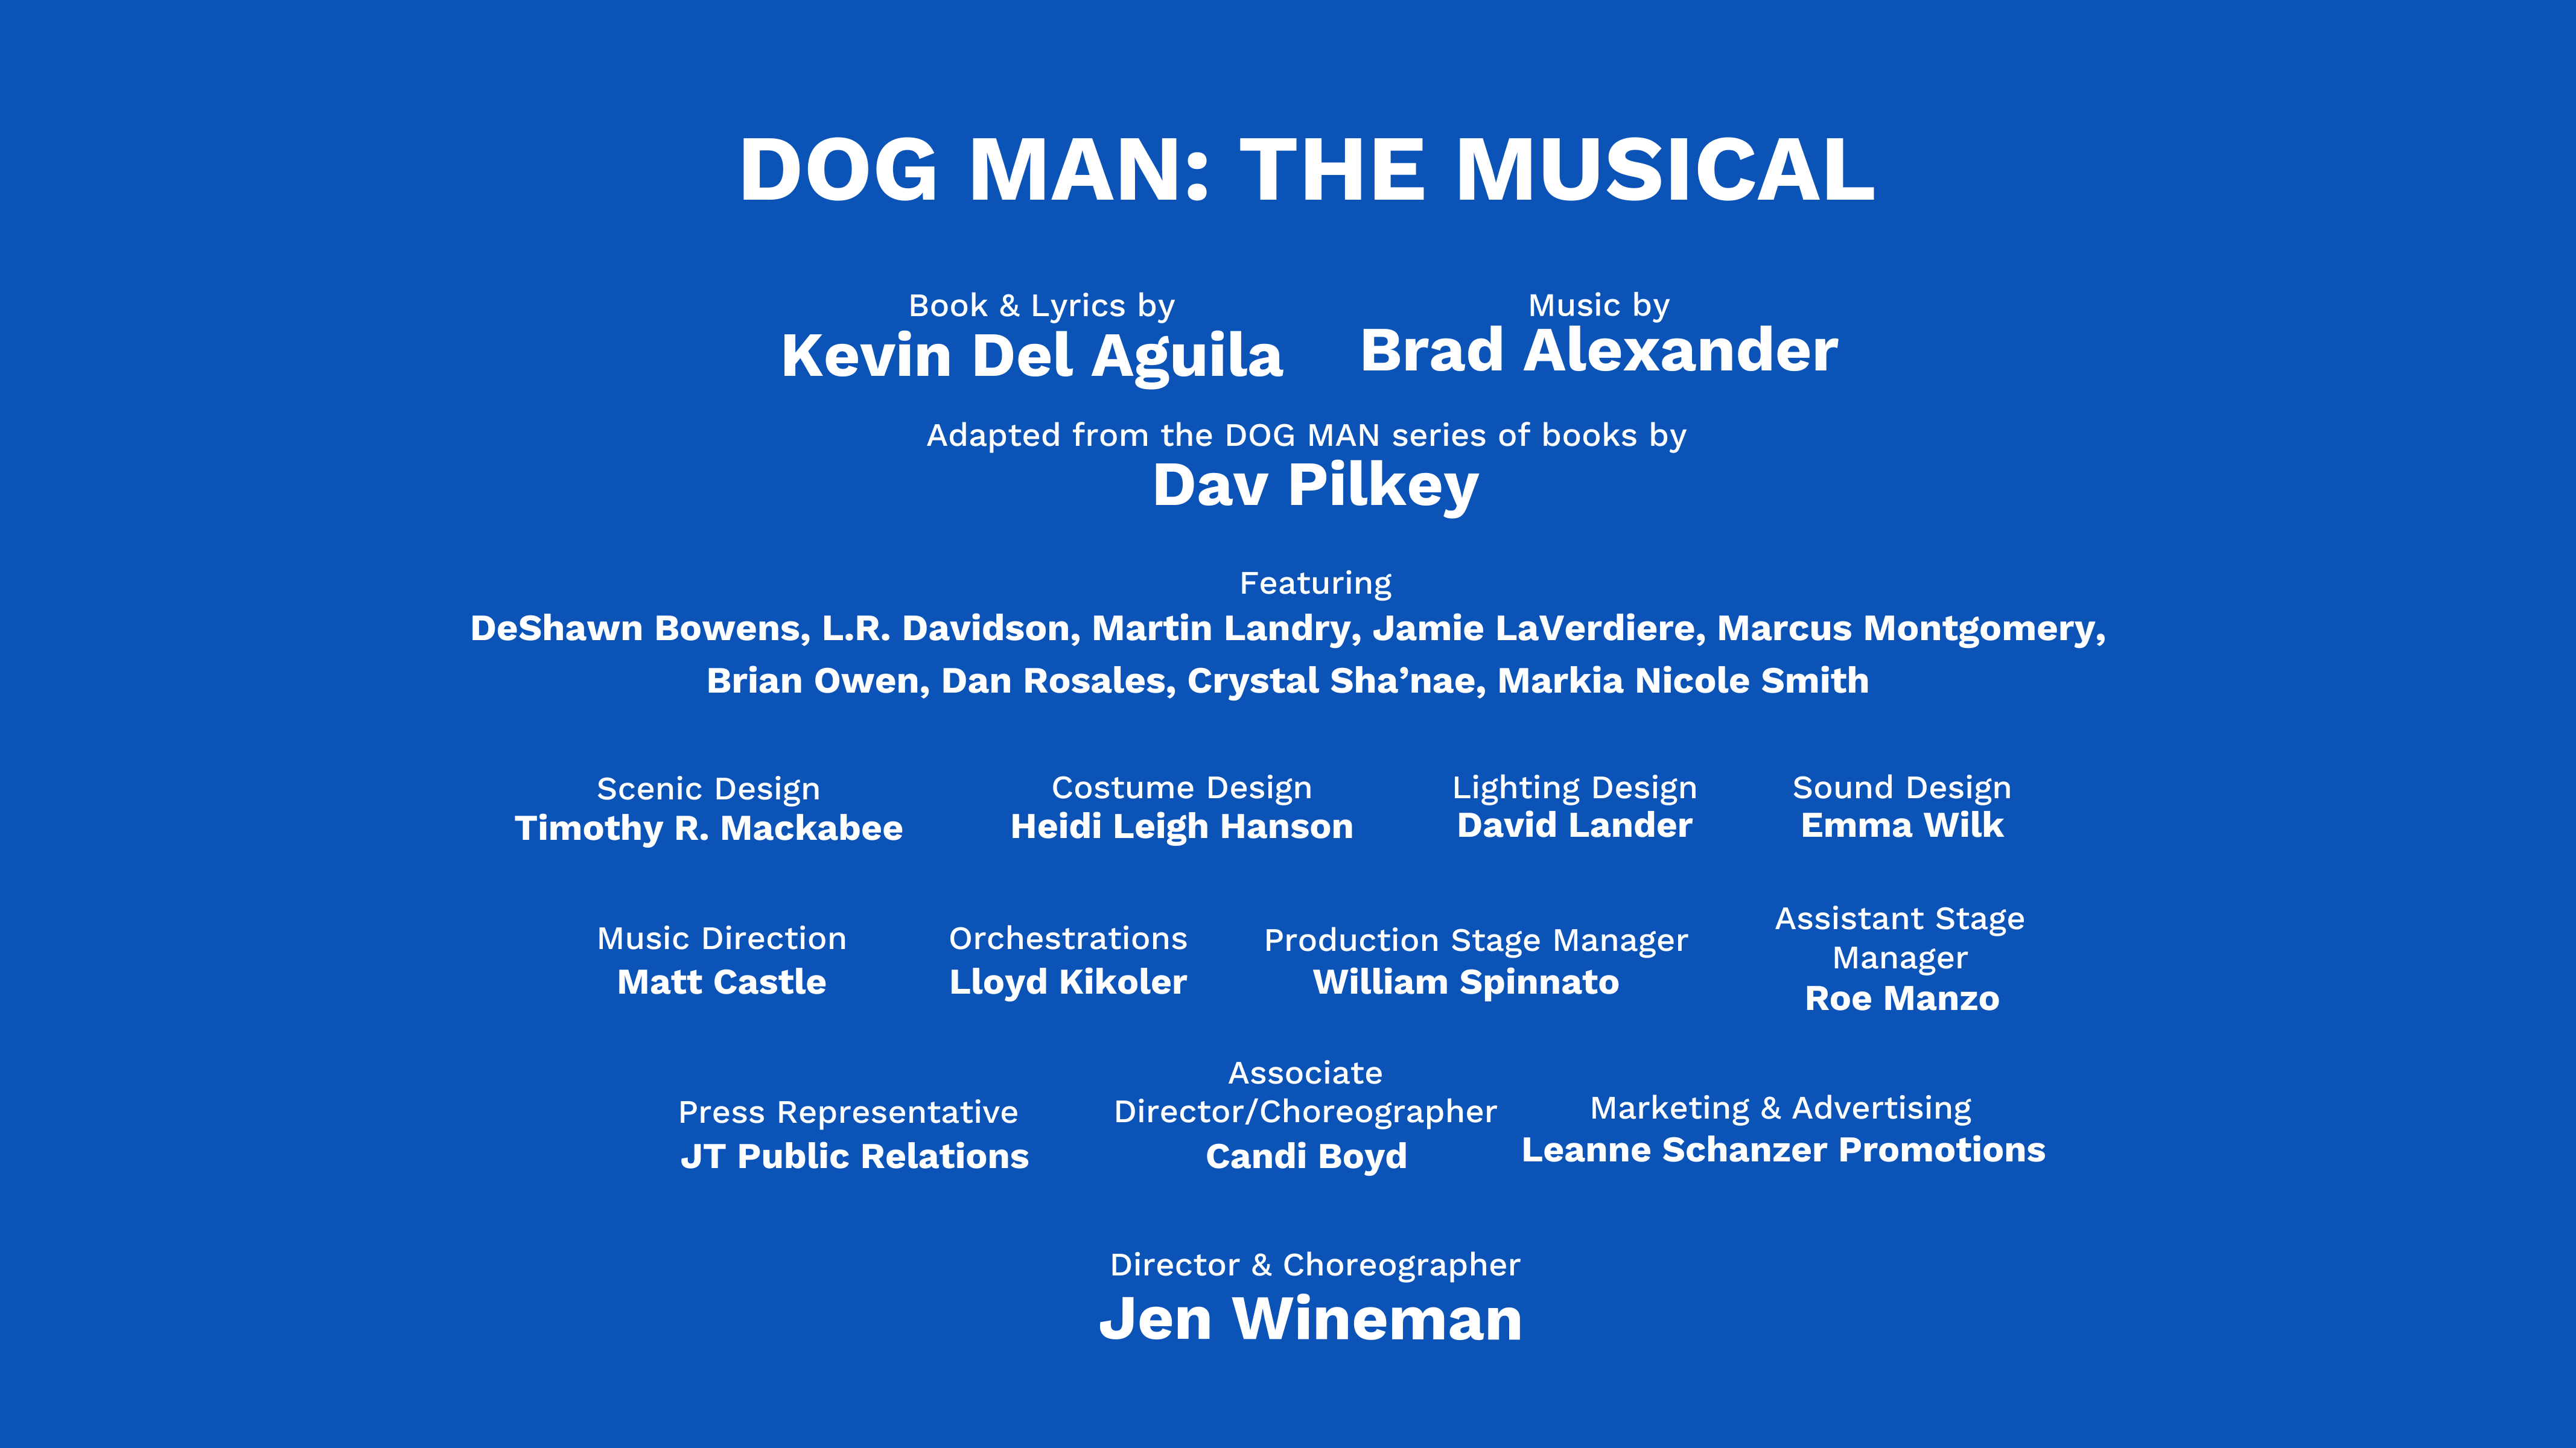 THEATERWORKSUSA presents DOG MAN: THE MUSICAL book and lyrics KEVIN DEL AGUILA music BRAD ALEXANDER adapted from the DOG MAN SERIES OF BOOKS by DAV PILKEY direction and choreography JEN WINEMAN featuring DESHAWN BOWENS, L.R. DAVIDSON, MARTIN LANDRY, JAMIE LAVERDIERE, MARCUS MONTGOMERY, BRIAN OWEN, DAN ROSALES, CRYSTAL SHA’NAE, MARKIA NICOLE SMITH scenic design TIMOTHY R. MACKABEE costume design HEIDI LEIGH HANSON lighting design DAVID LANDER sound design EMMA WILK music direction MATT CASTLE orchestrations LLOYD KIKOLER associate director and choreographer CANDI BOYD stage management WILLIAM SPINNATO press representative JT PUBLIC RELATIONS advertising/marketing LEANNE SCHANZER PROMOTIONS digital/social media ANDY DRACHENBERG TheaterWorksUSA artistic director BARBARA PASTERNACK TheaterWorksUSA executive director MICHAEL HARRINGTON ticketing provider TELECHARGE